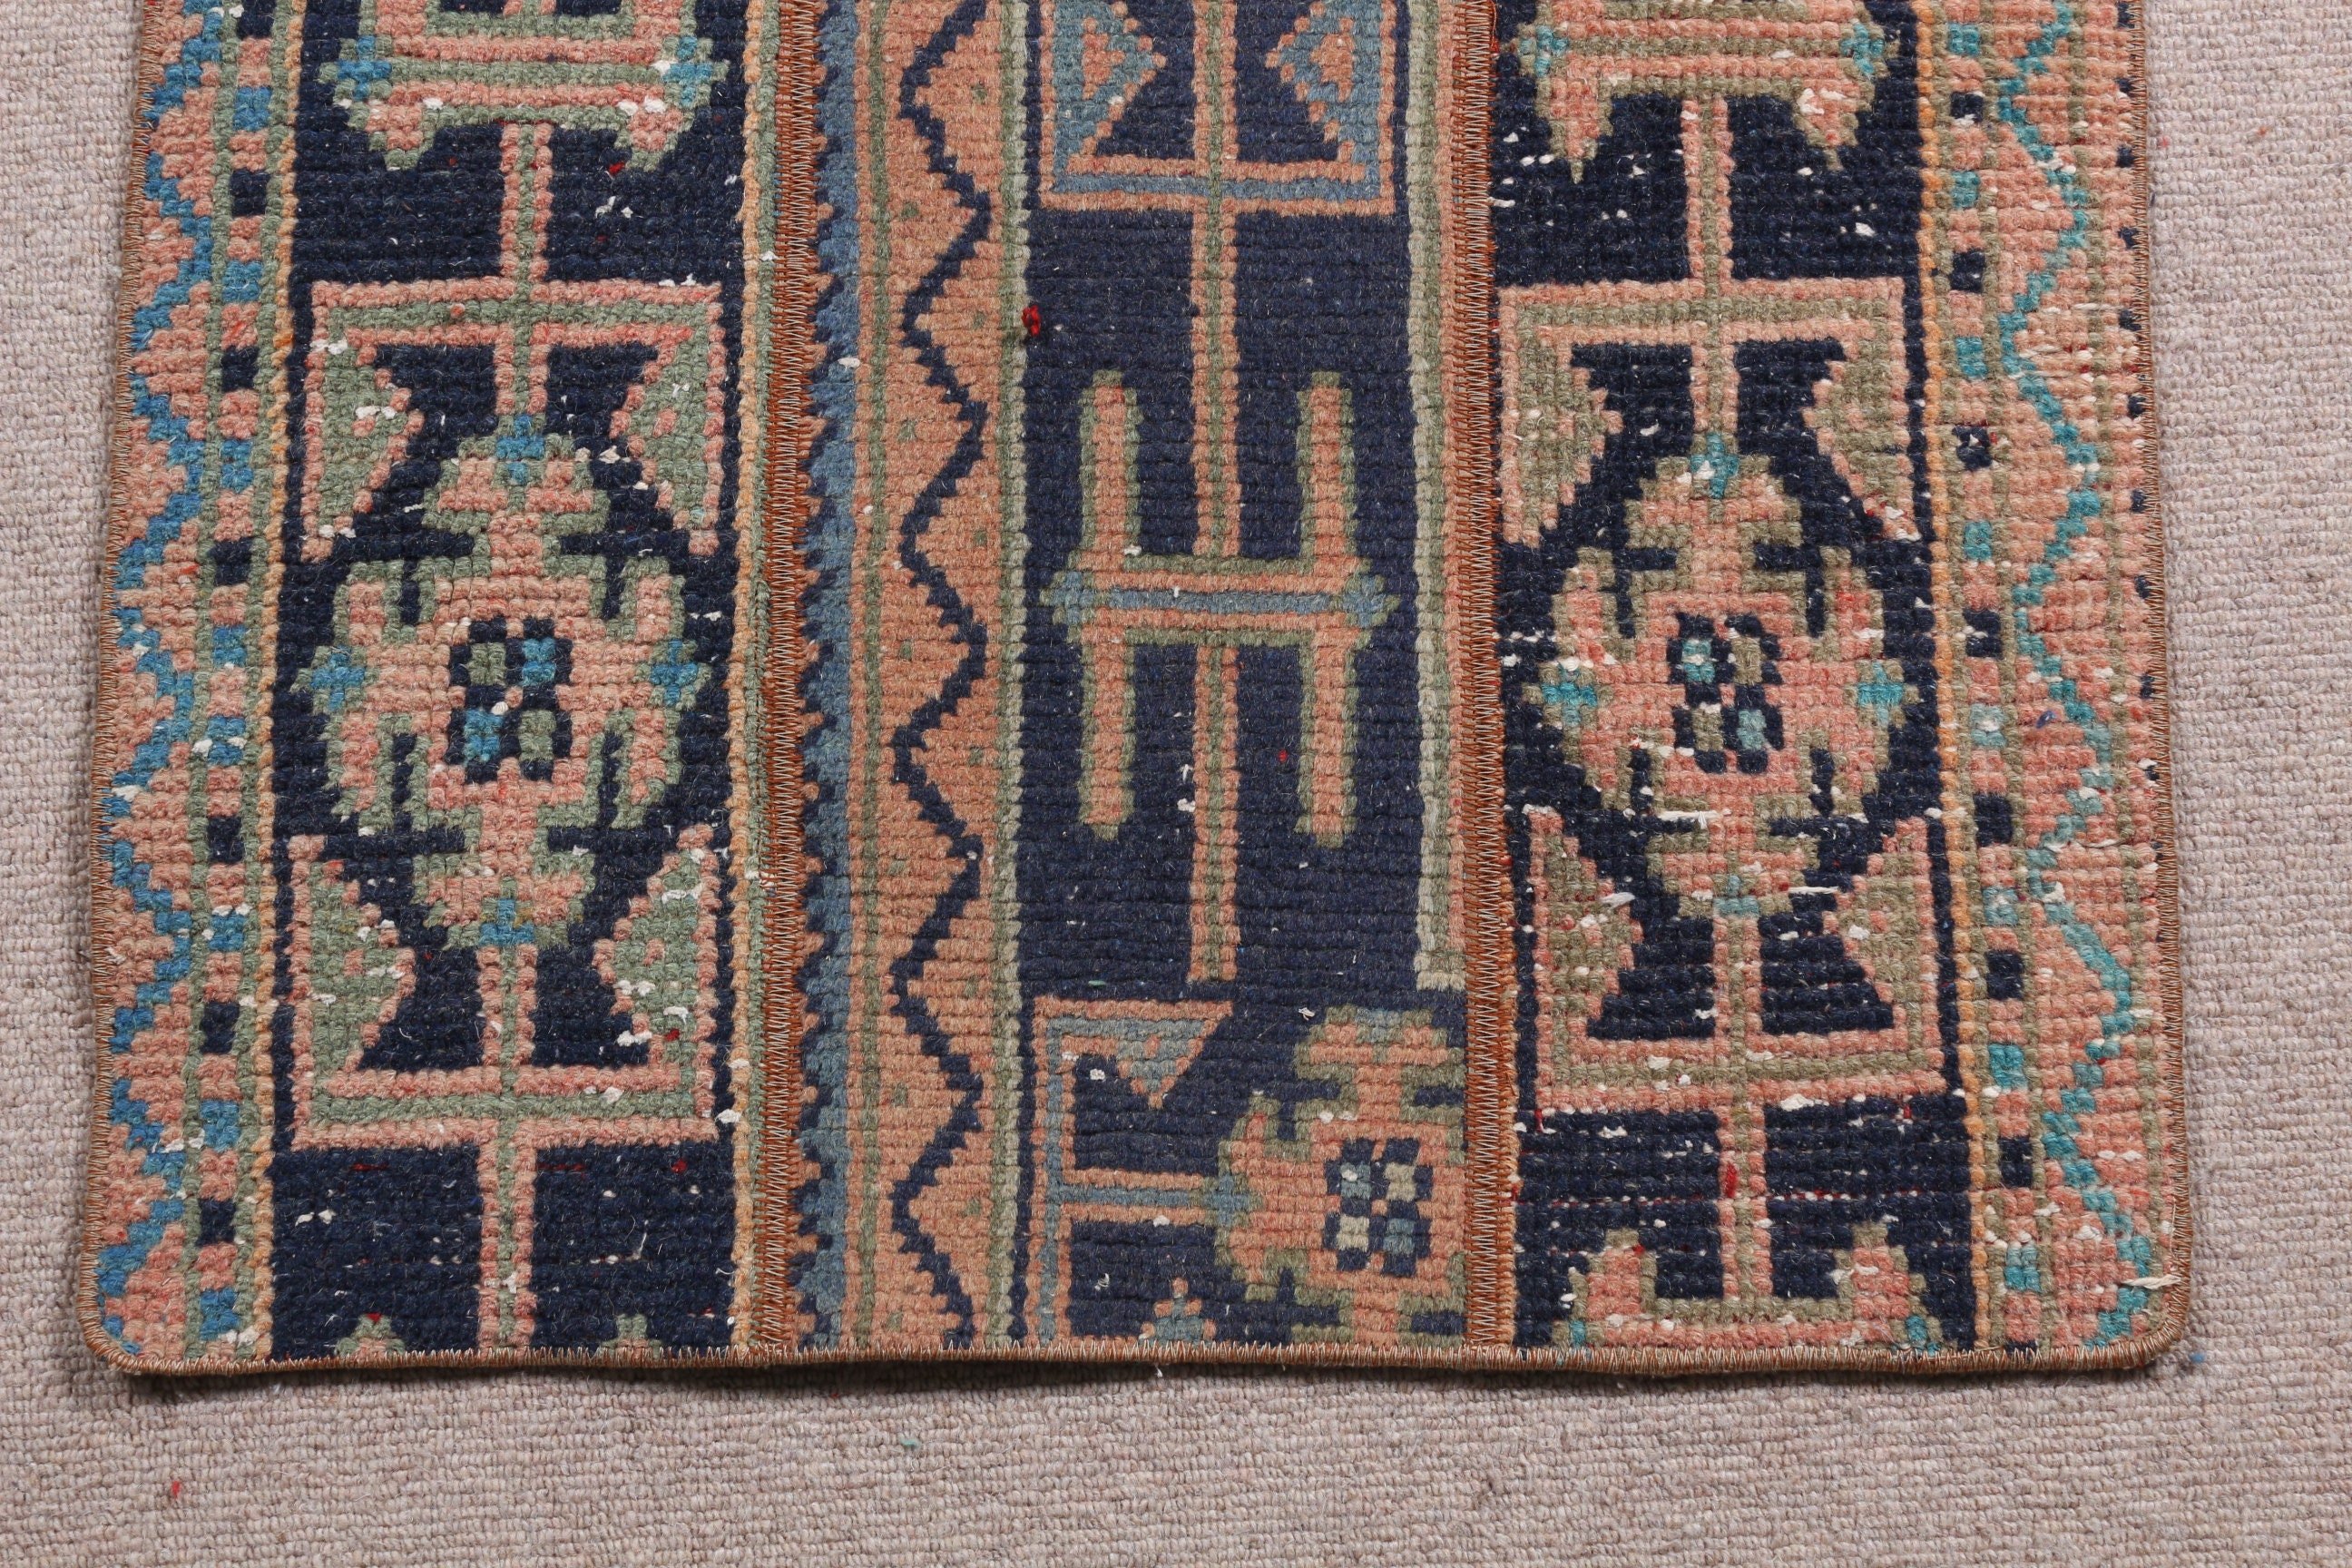 Art Rug, Turkish Rug, Door Mat Rug, Car Mat Rug, Blue Bedroom Rugs, Bedroom Rug, Anatolian Rugs, Vintage Rugs, 2.1x3.8 ft Small Rugs